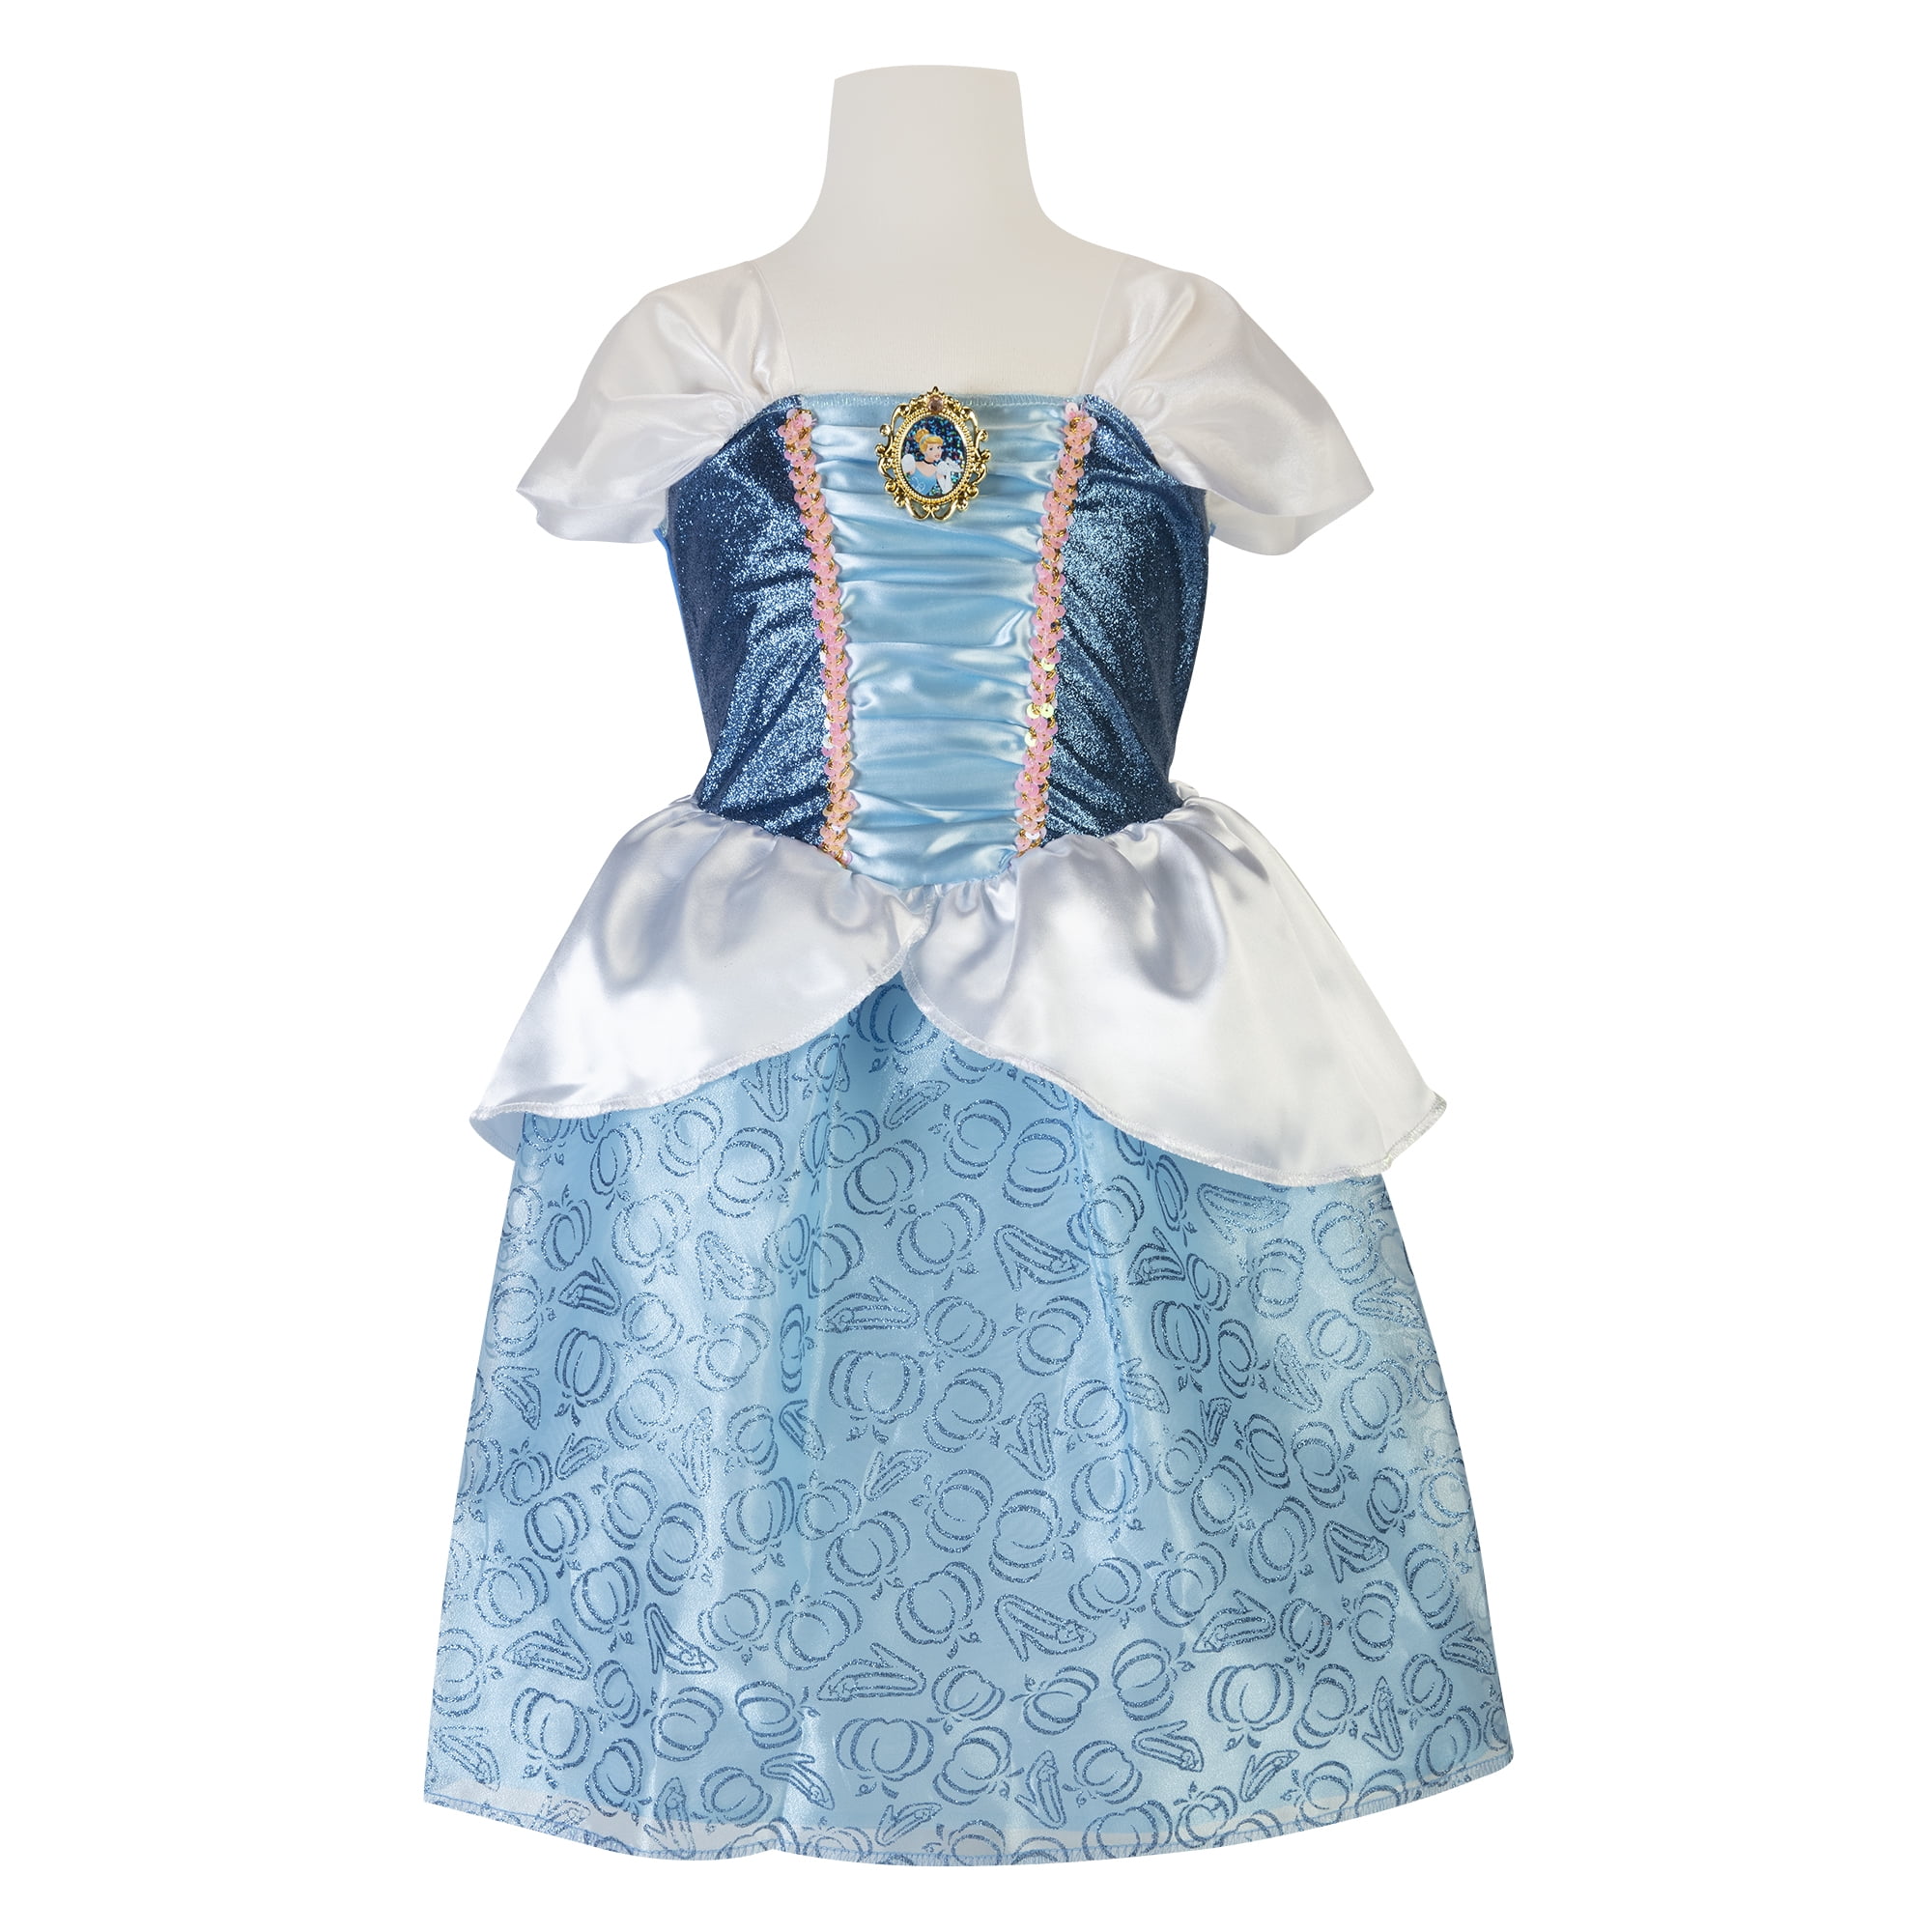 Disney Princess Cinderella Deluxe Light-Up Dress Halloween Costume Gown Sz 4 5 6